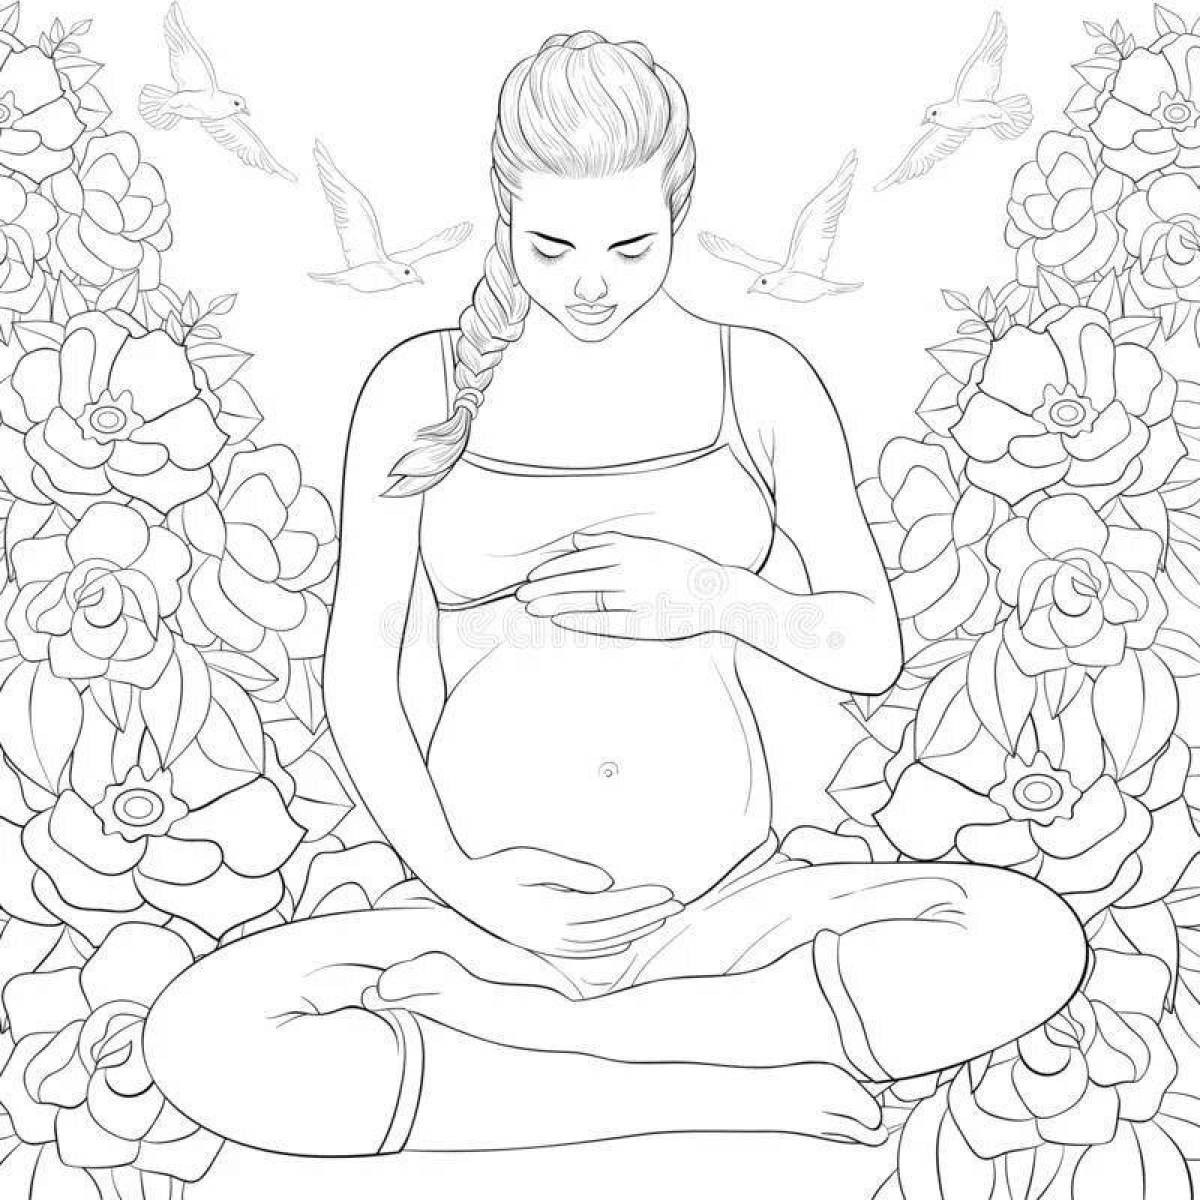 Wonderful pregnancy coloring page